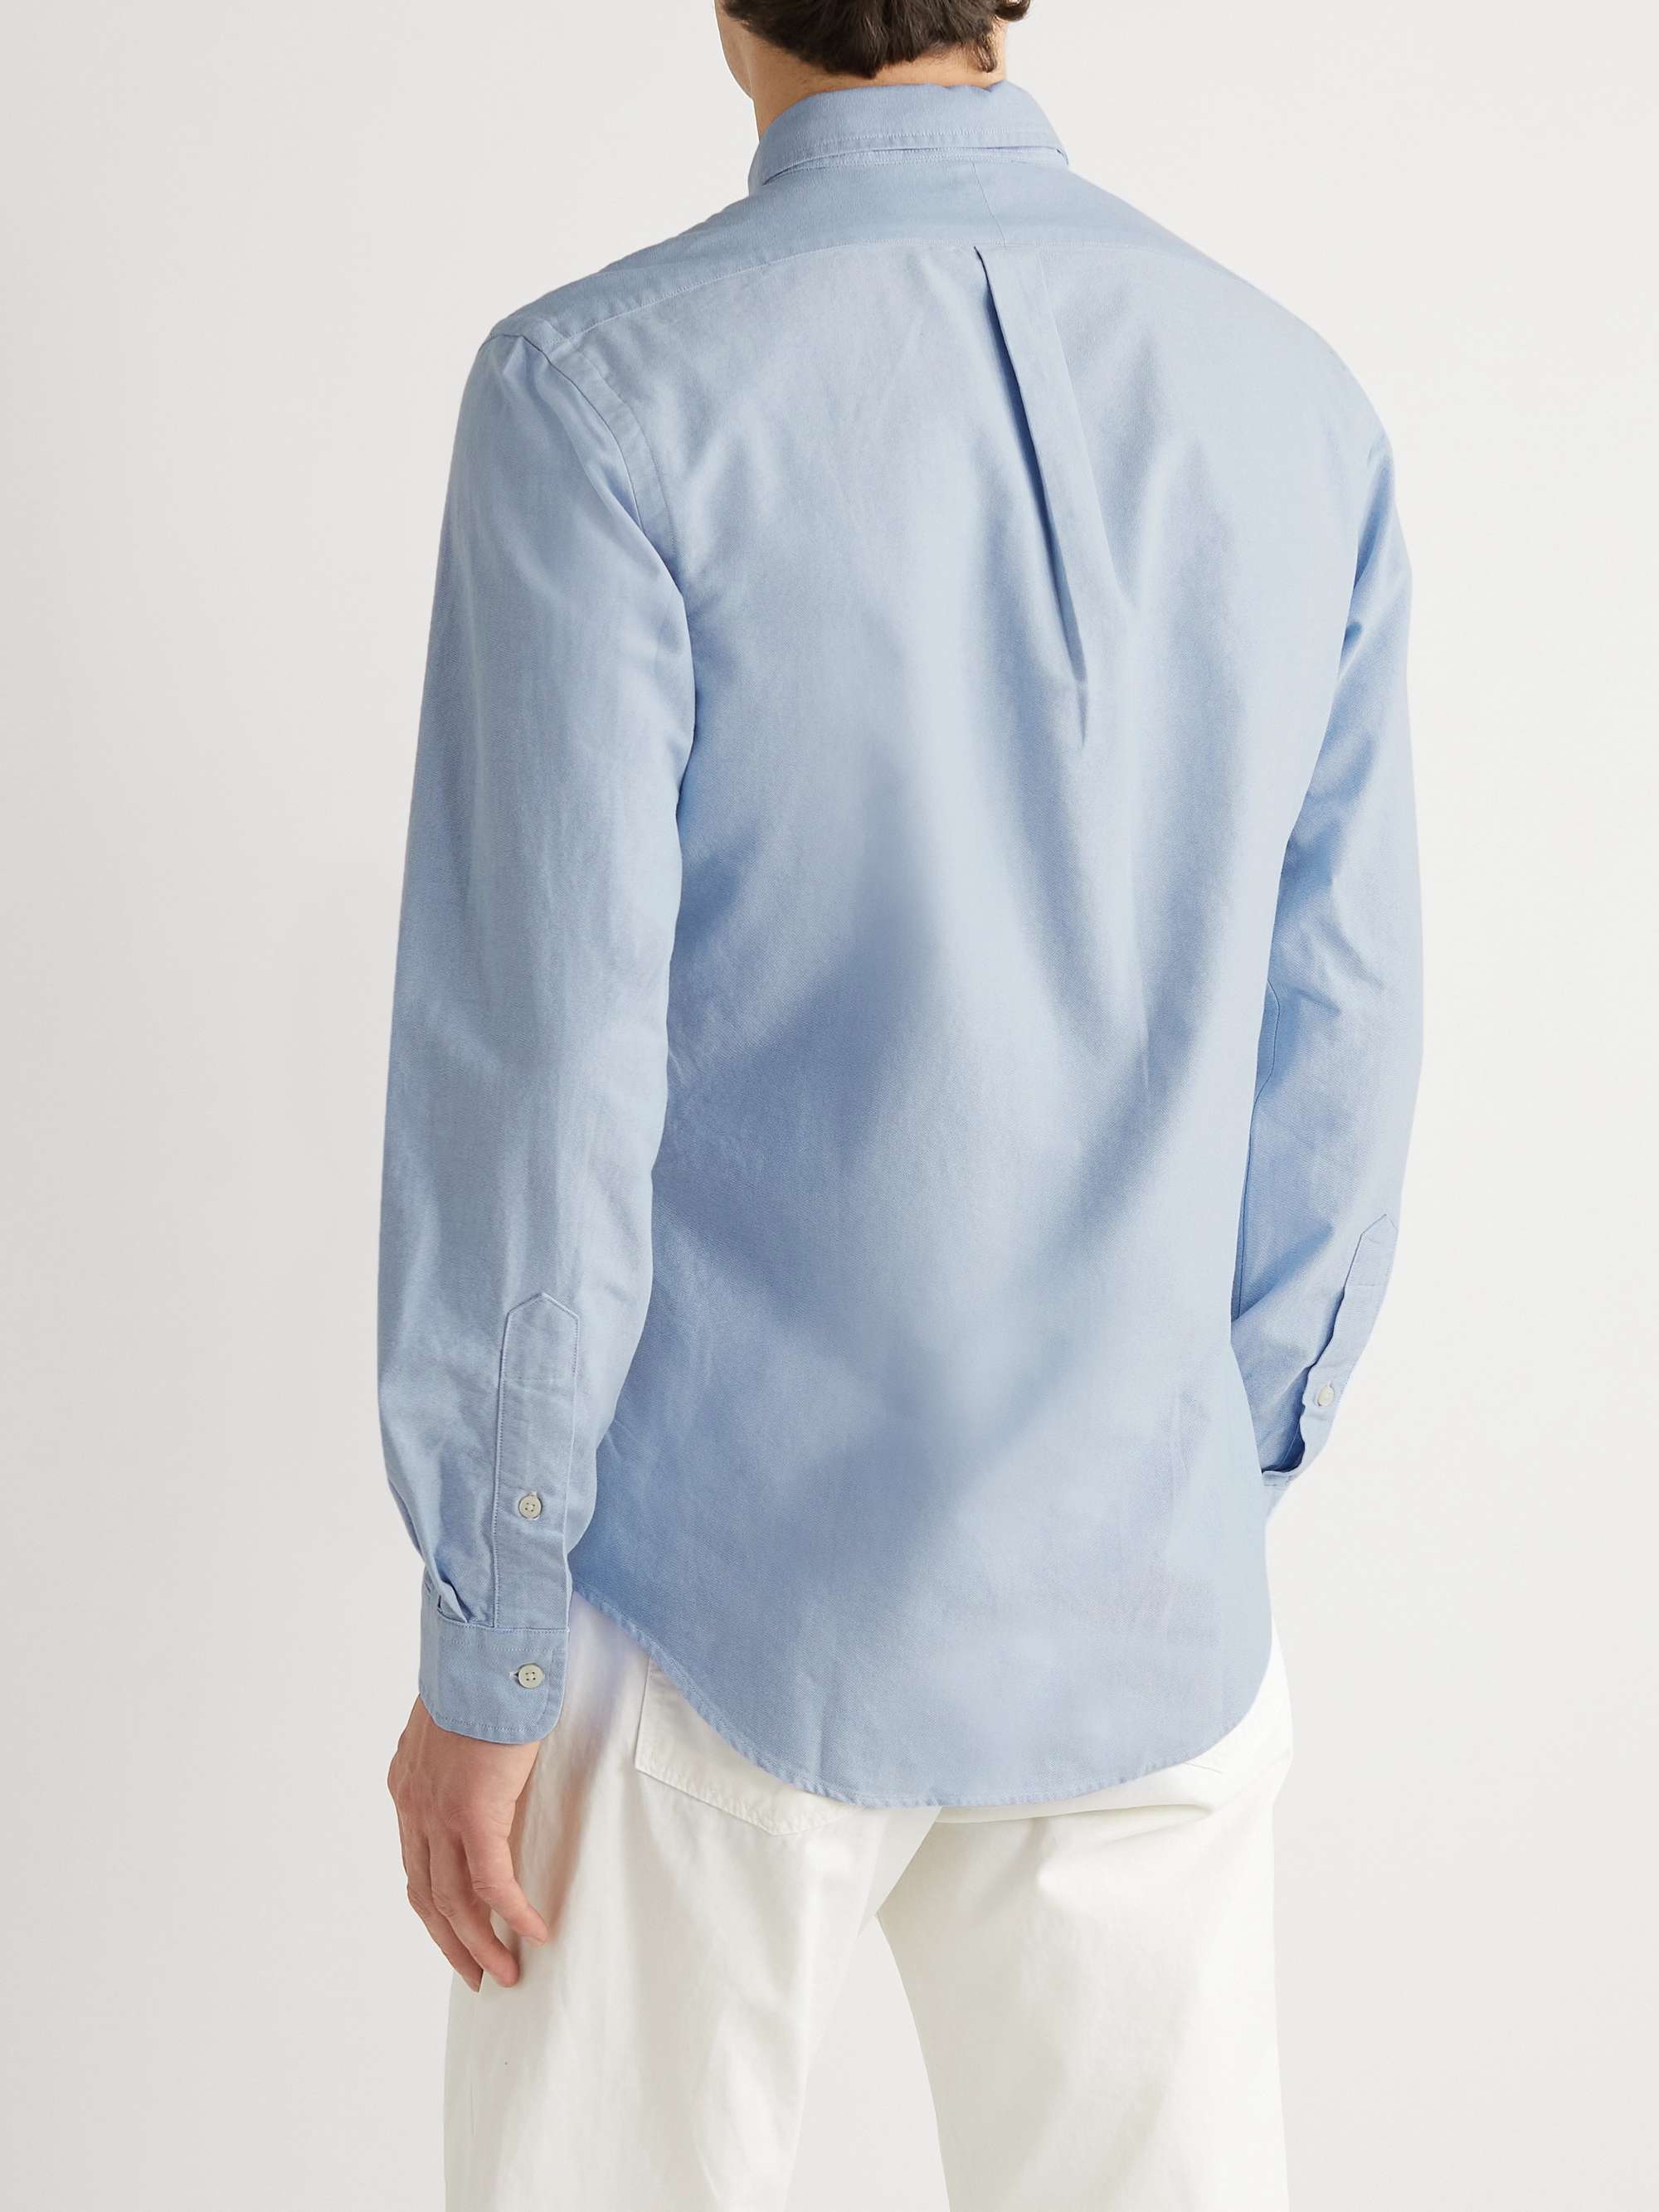 POLO RALPH LAUREN Slim-Fit Cotton Oxford Shirt